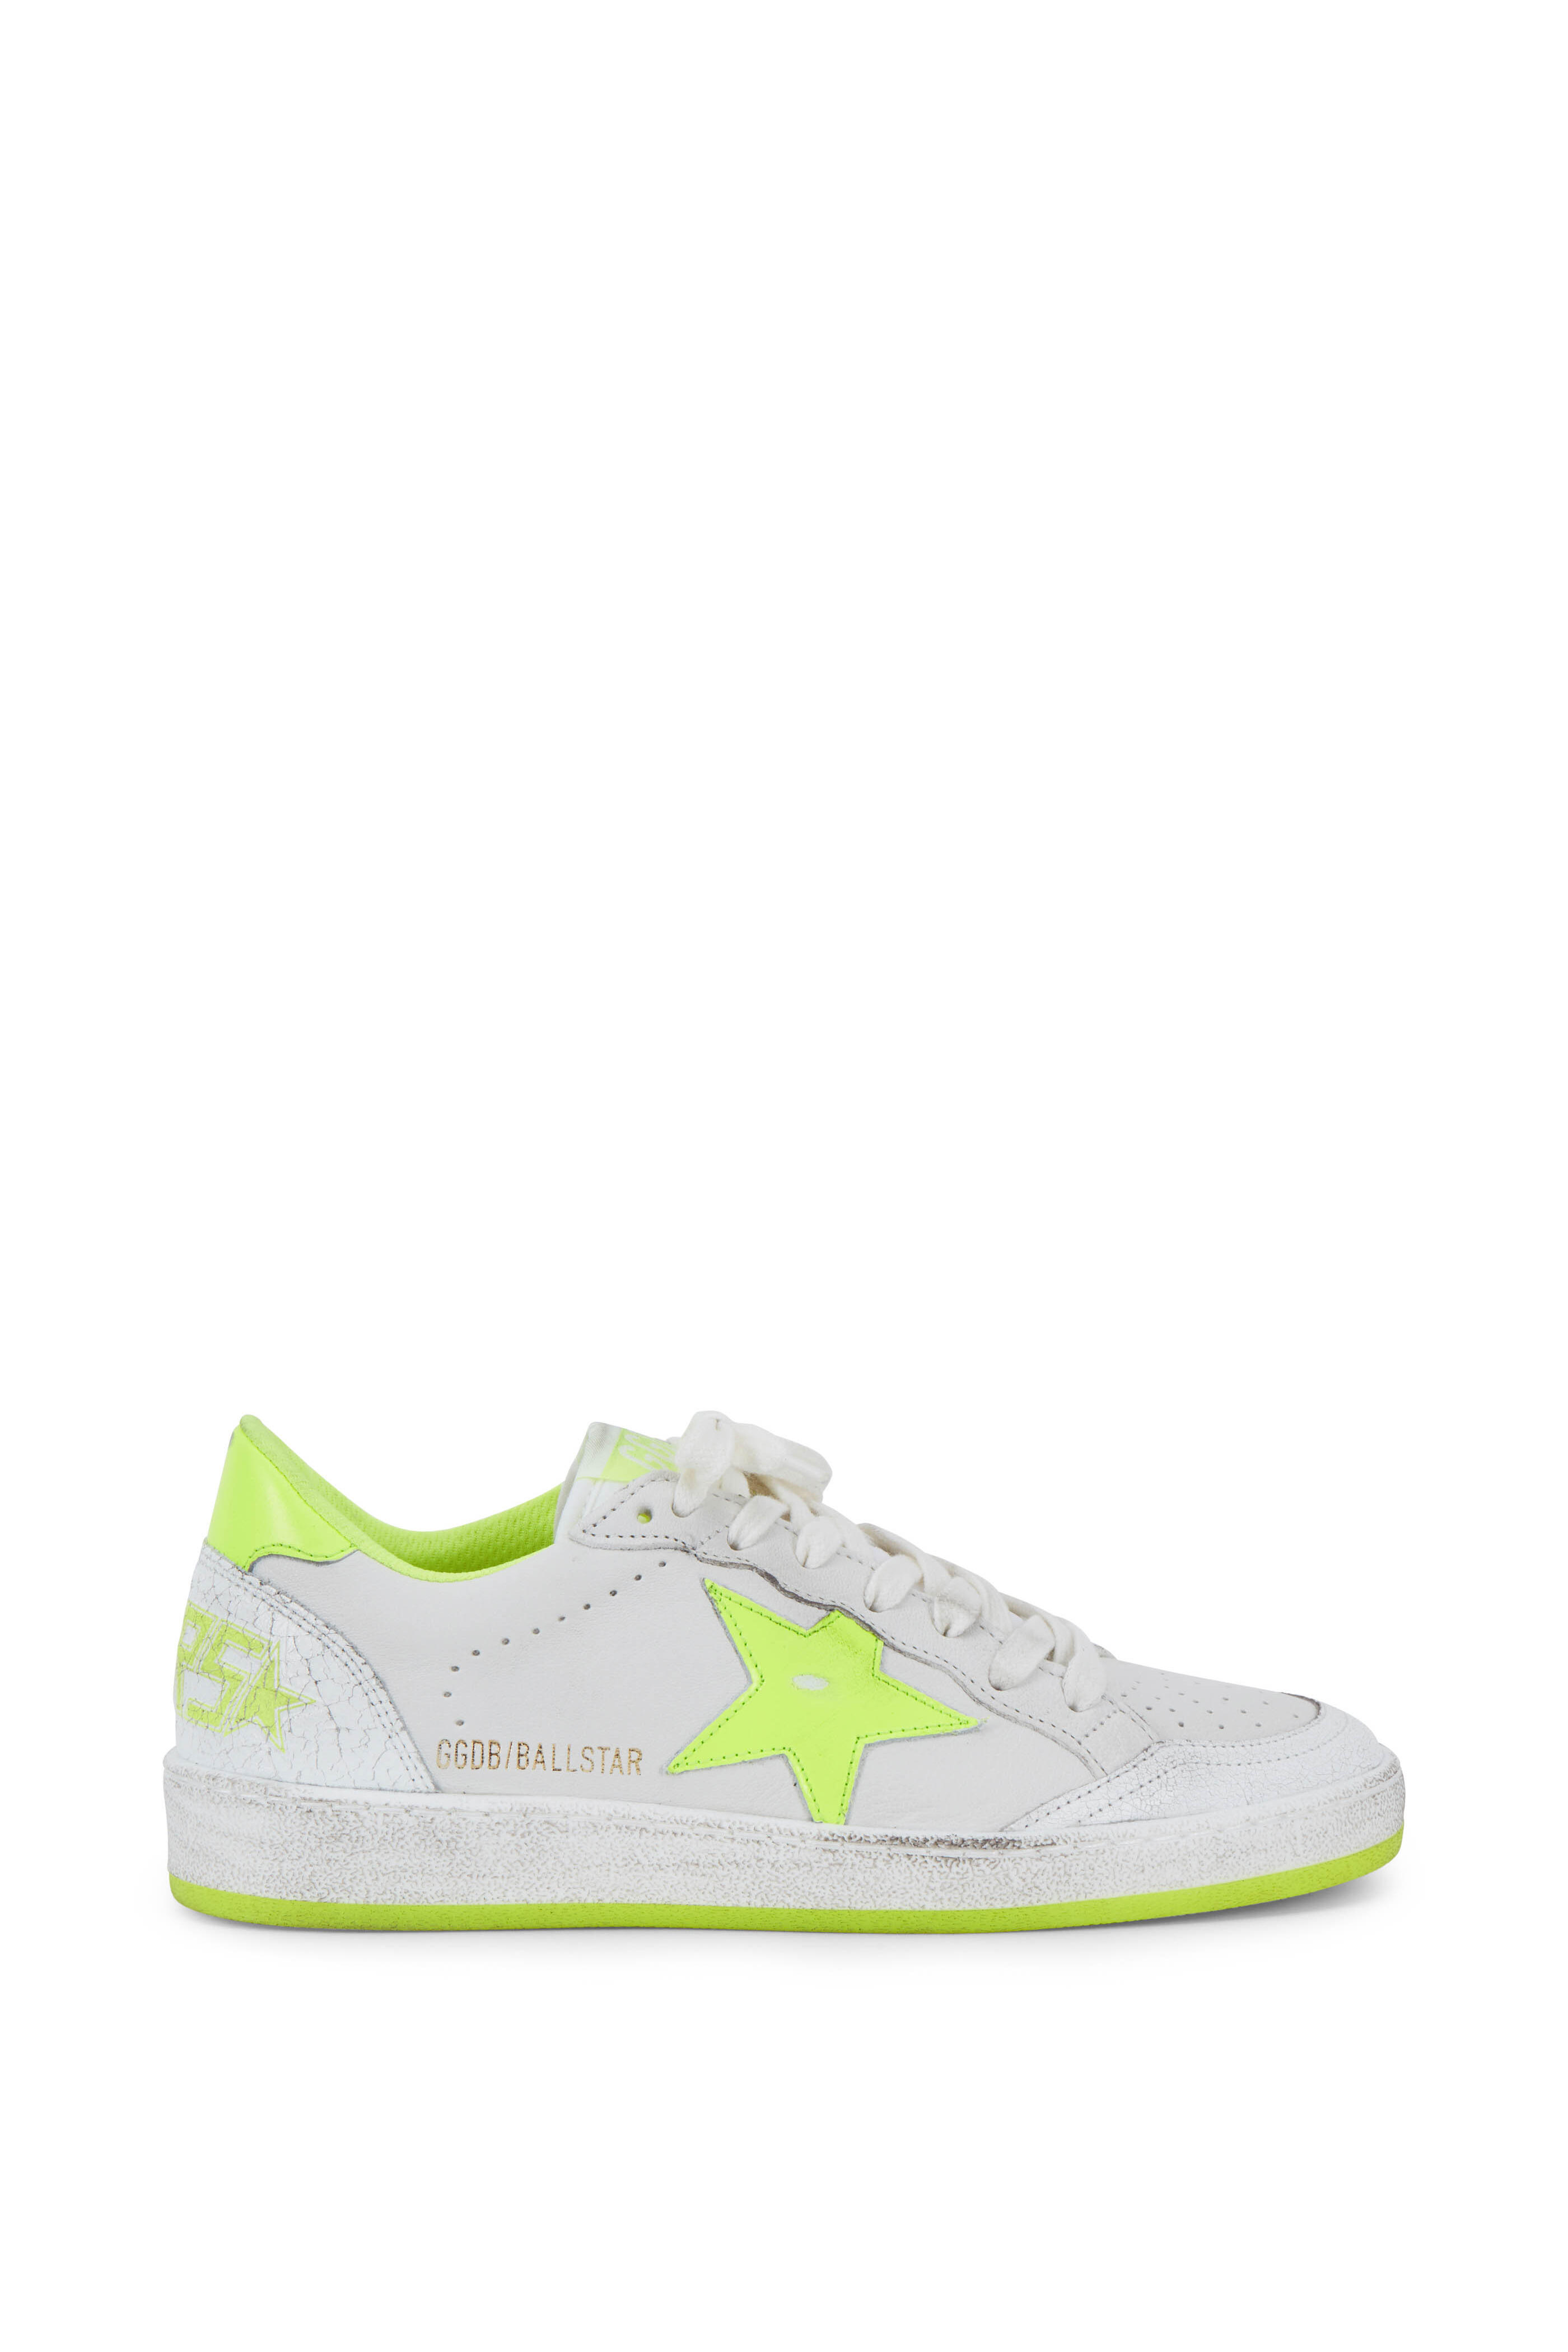 Golden Goose - Ball Star White & Neon Yellow Low Top Sneaker